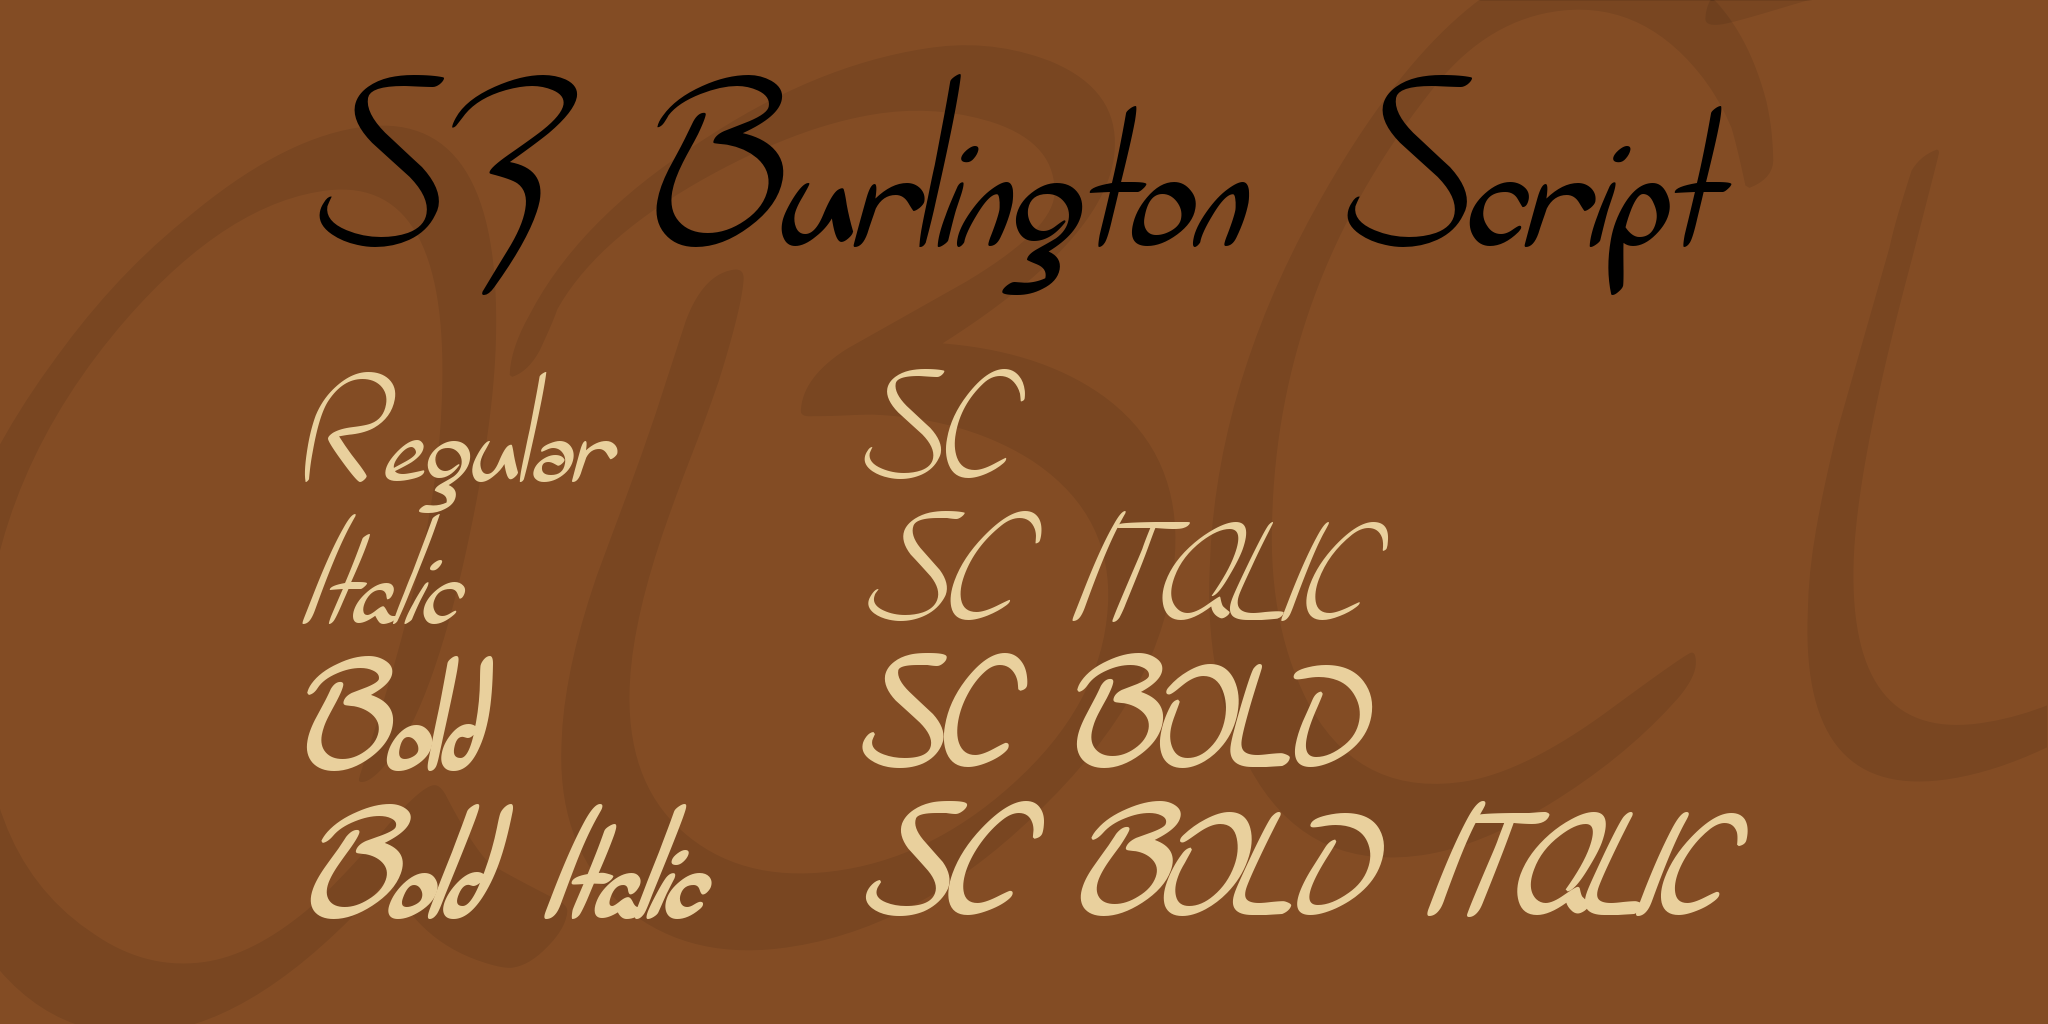 Sf Burlington Script